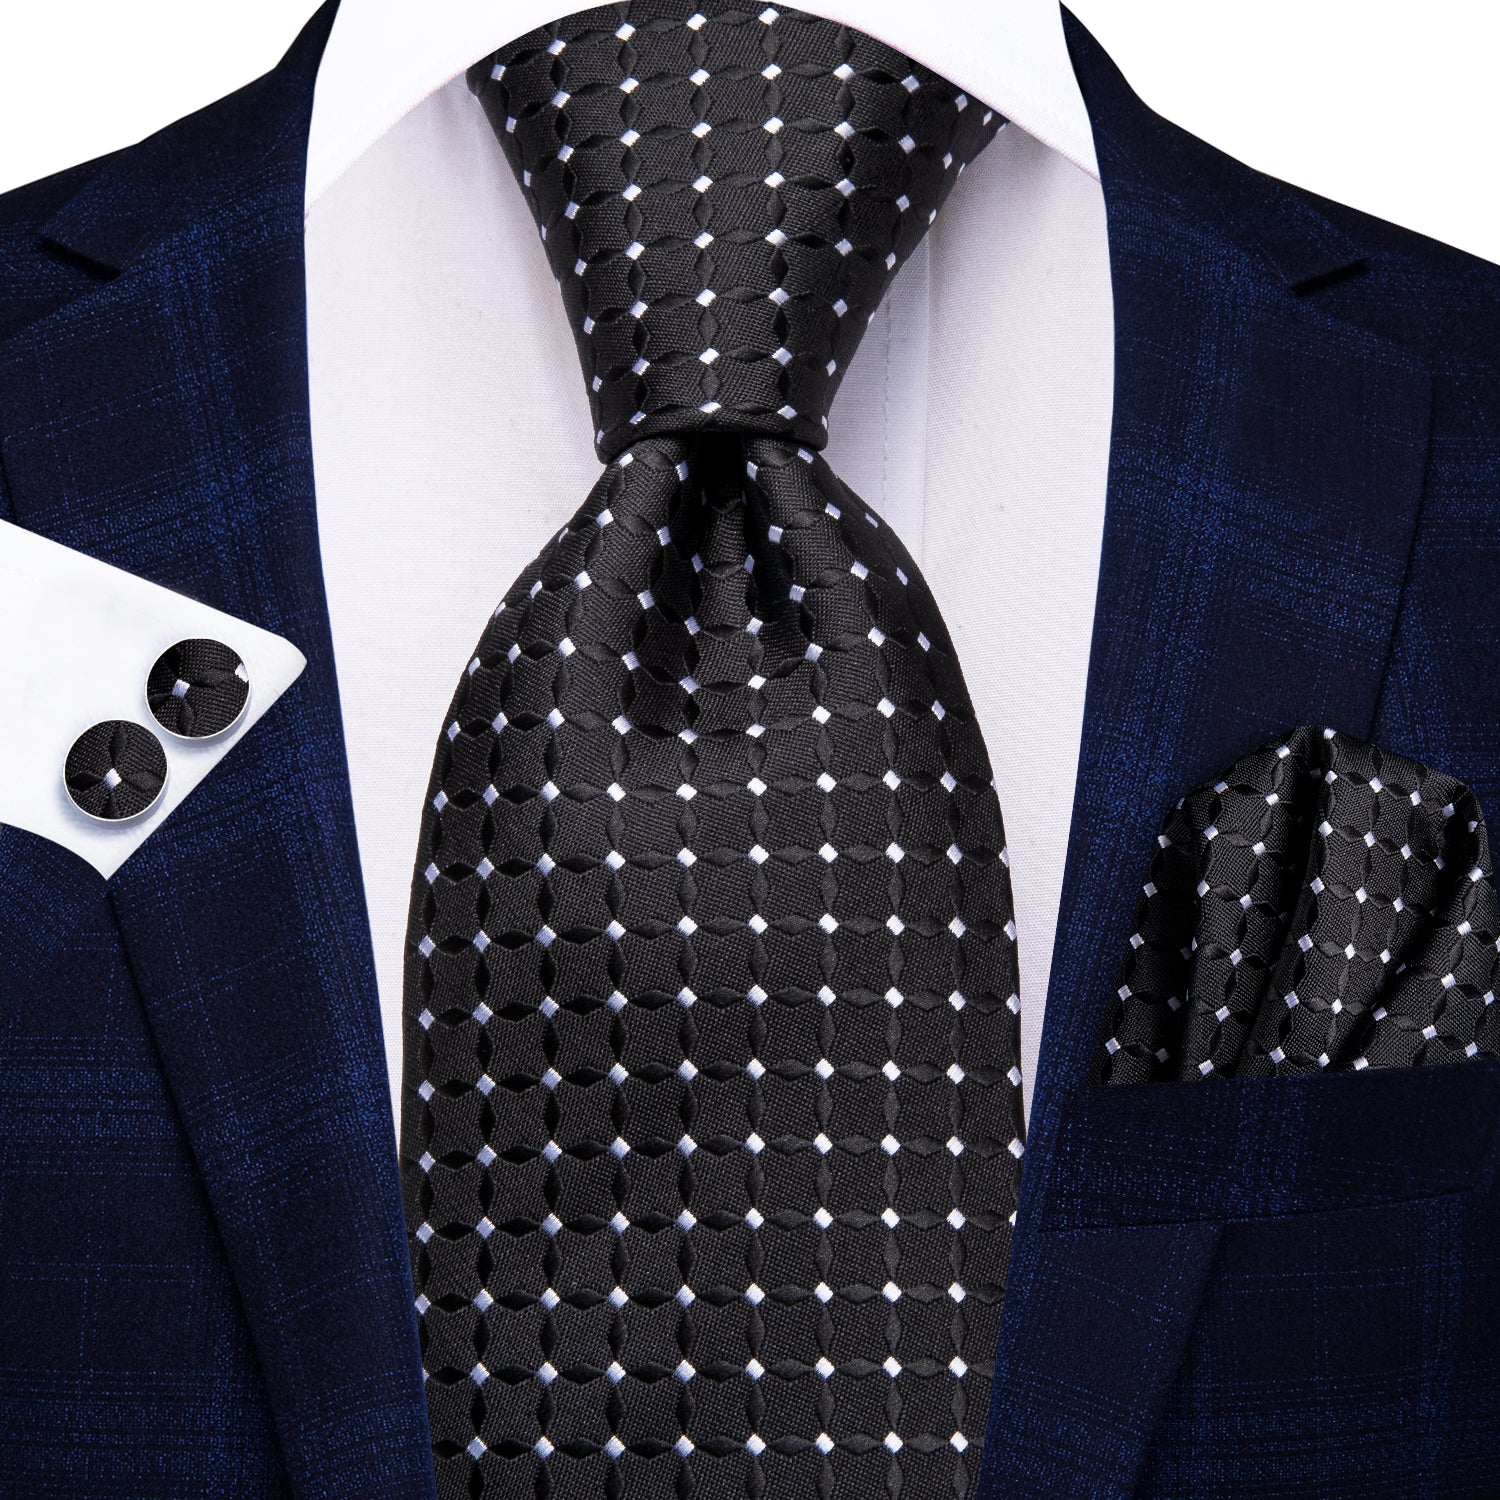 Hi-Tie Black White Novelty Men's Tie Pocket Square Cufflinks Set